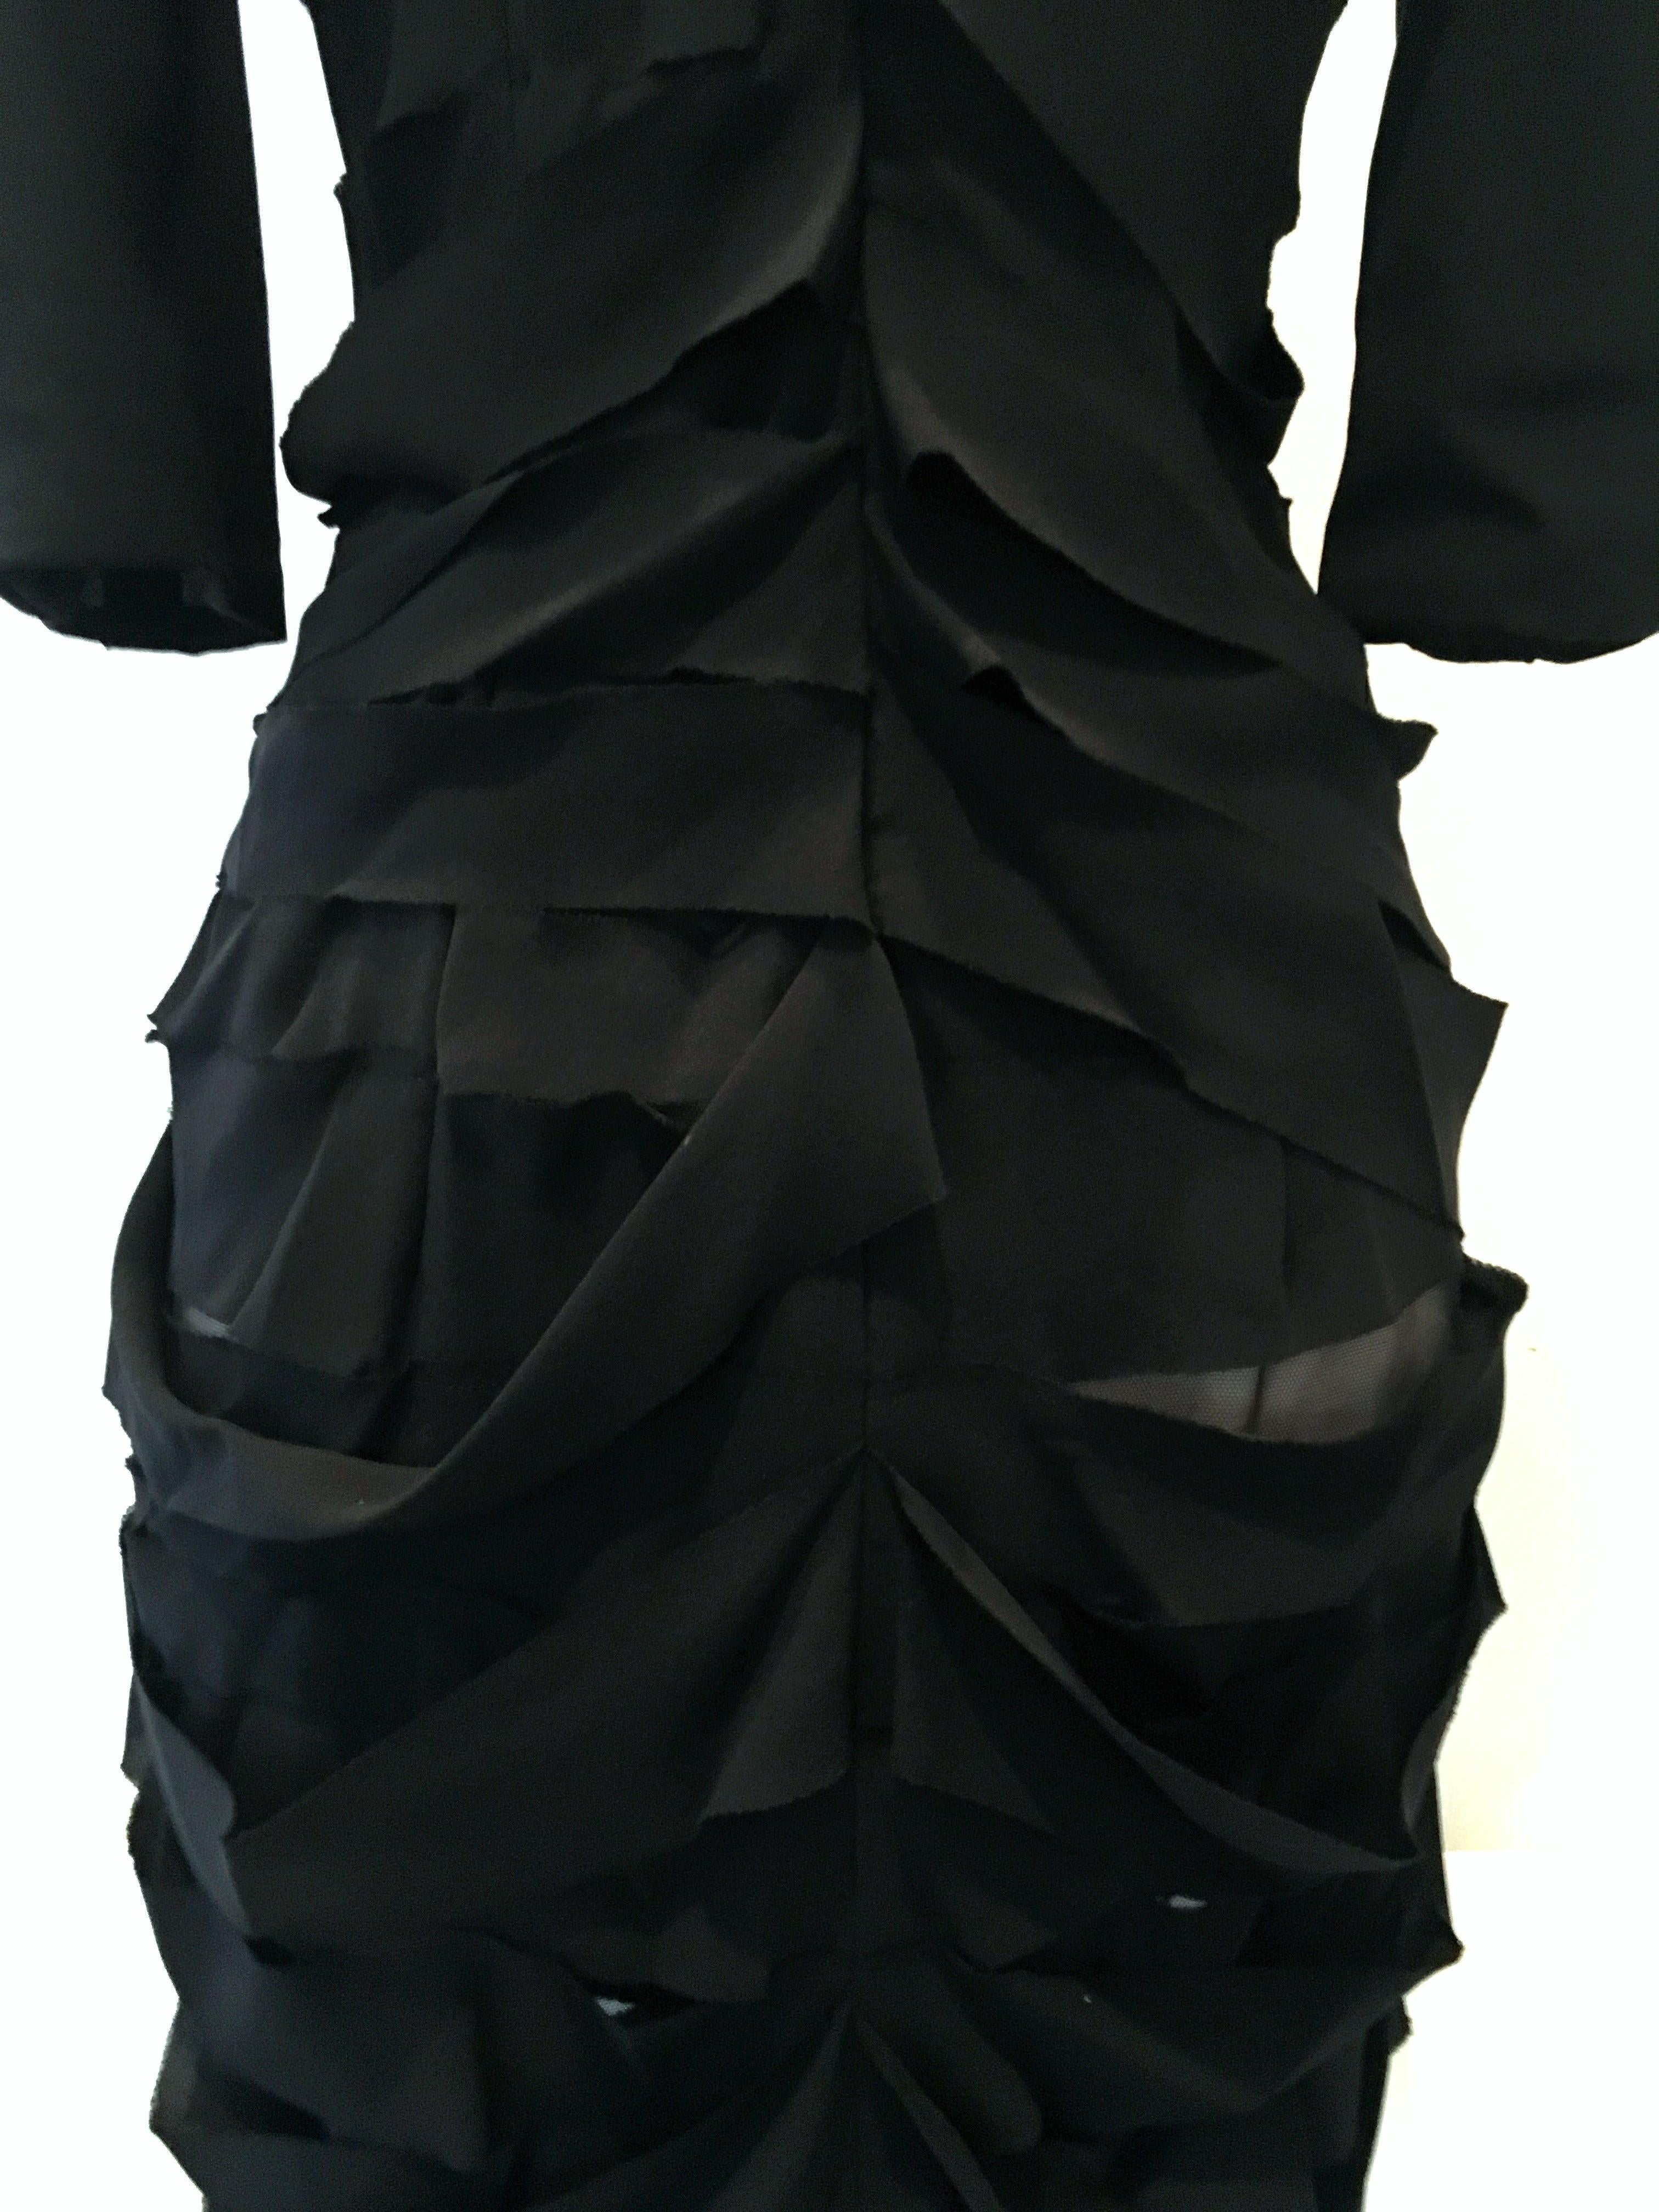 21st Century & New Black Silk Dress By, Nina Ricci Paris 2